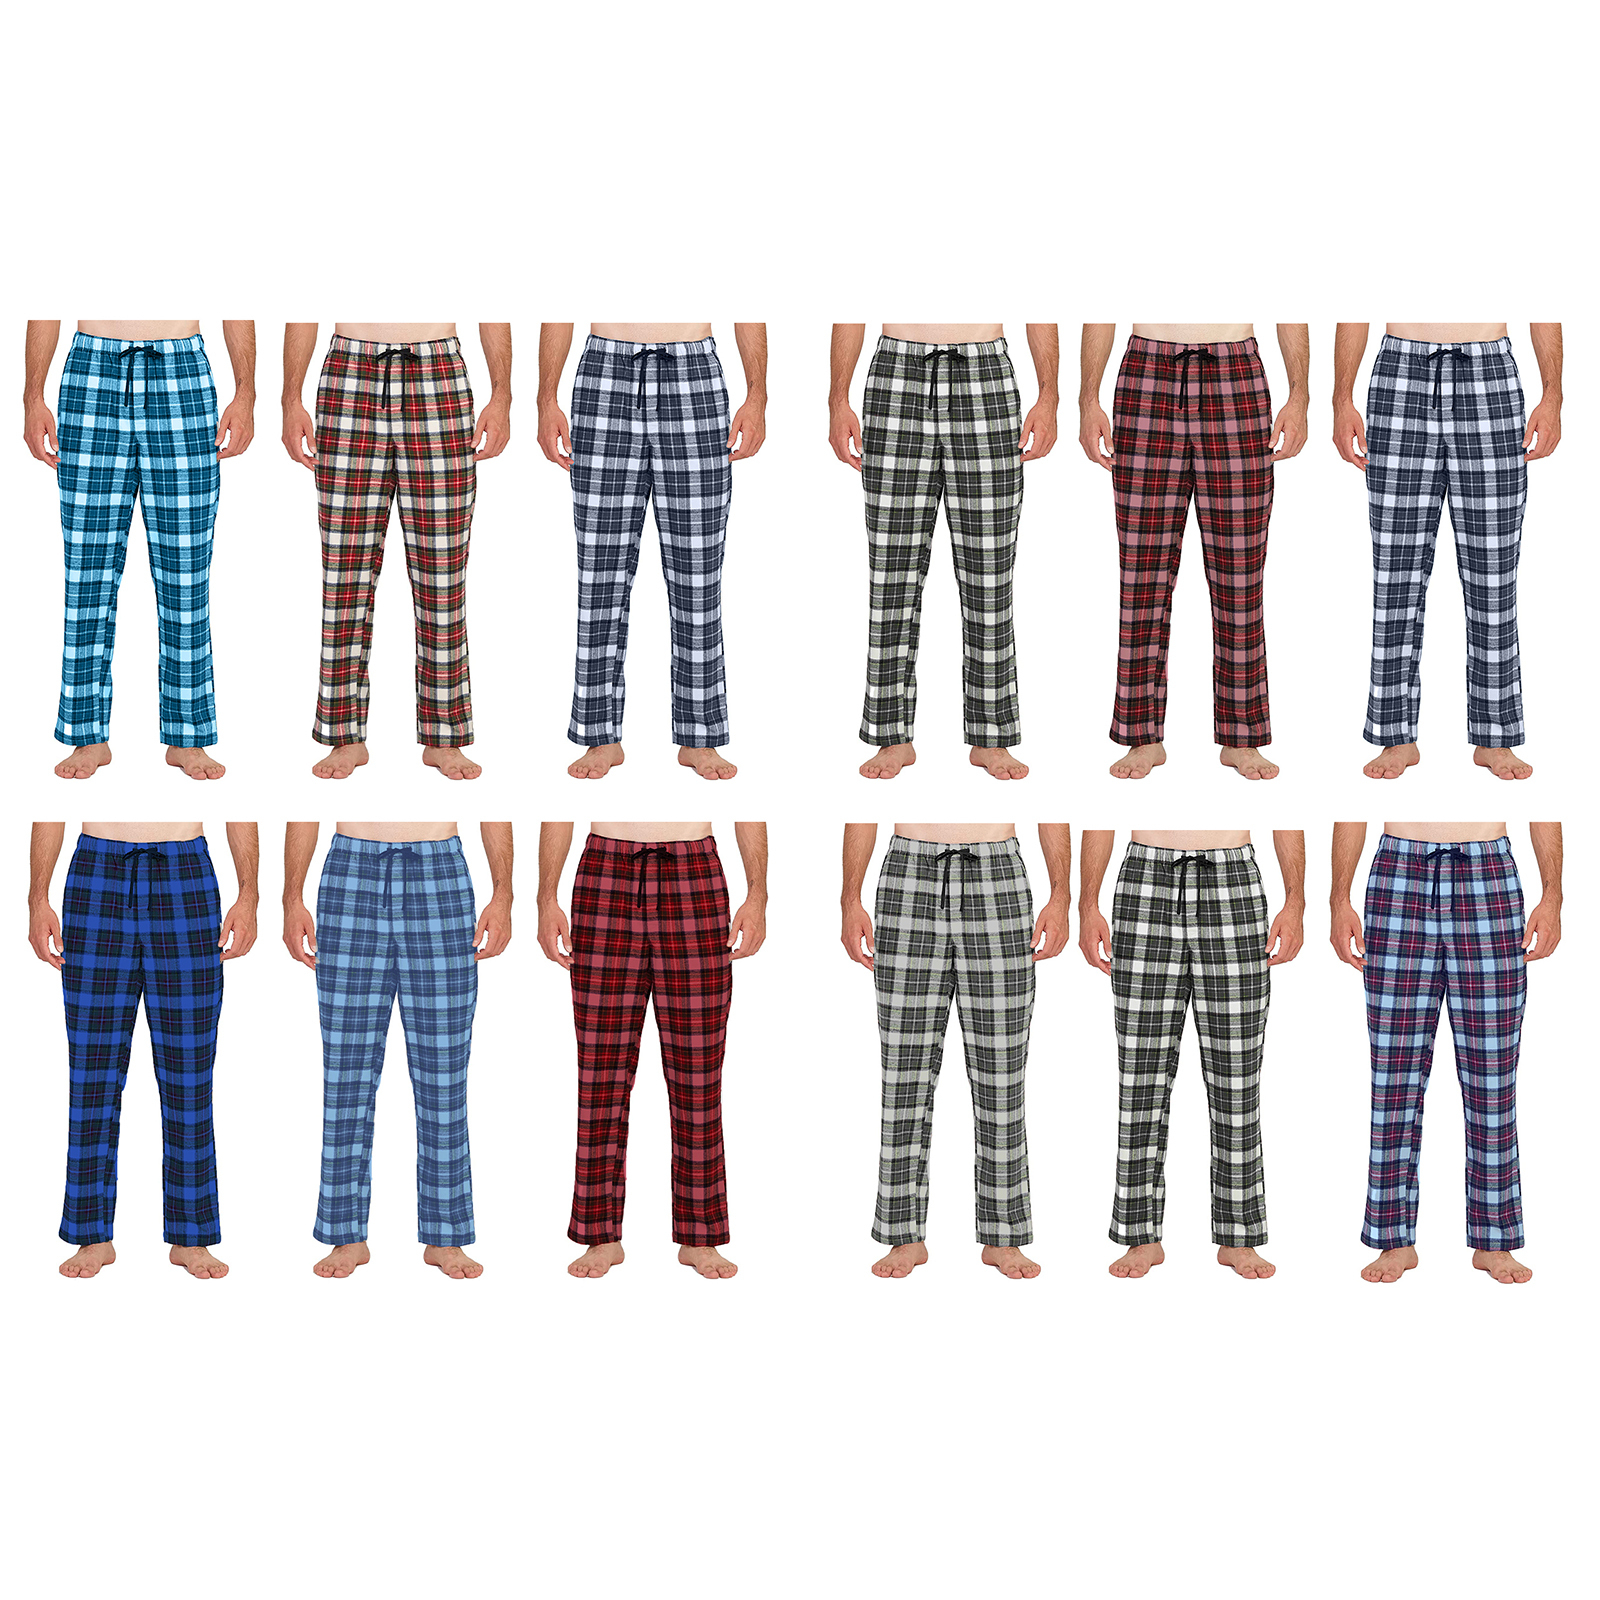 3-Pack: Men's Soft 100% Cotton Flannel Plaid Lounge Pajama Sleep Pants - Large